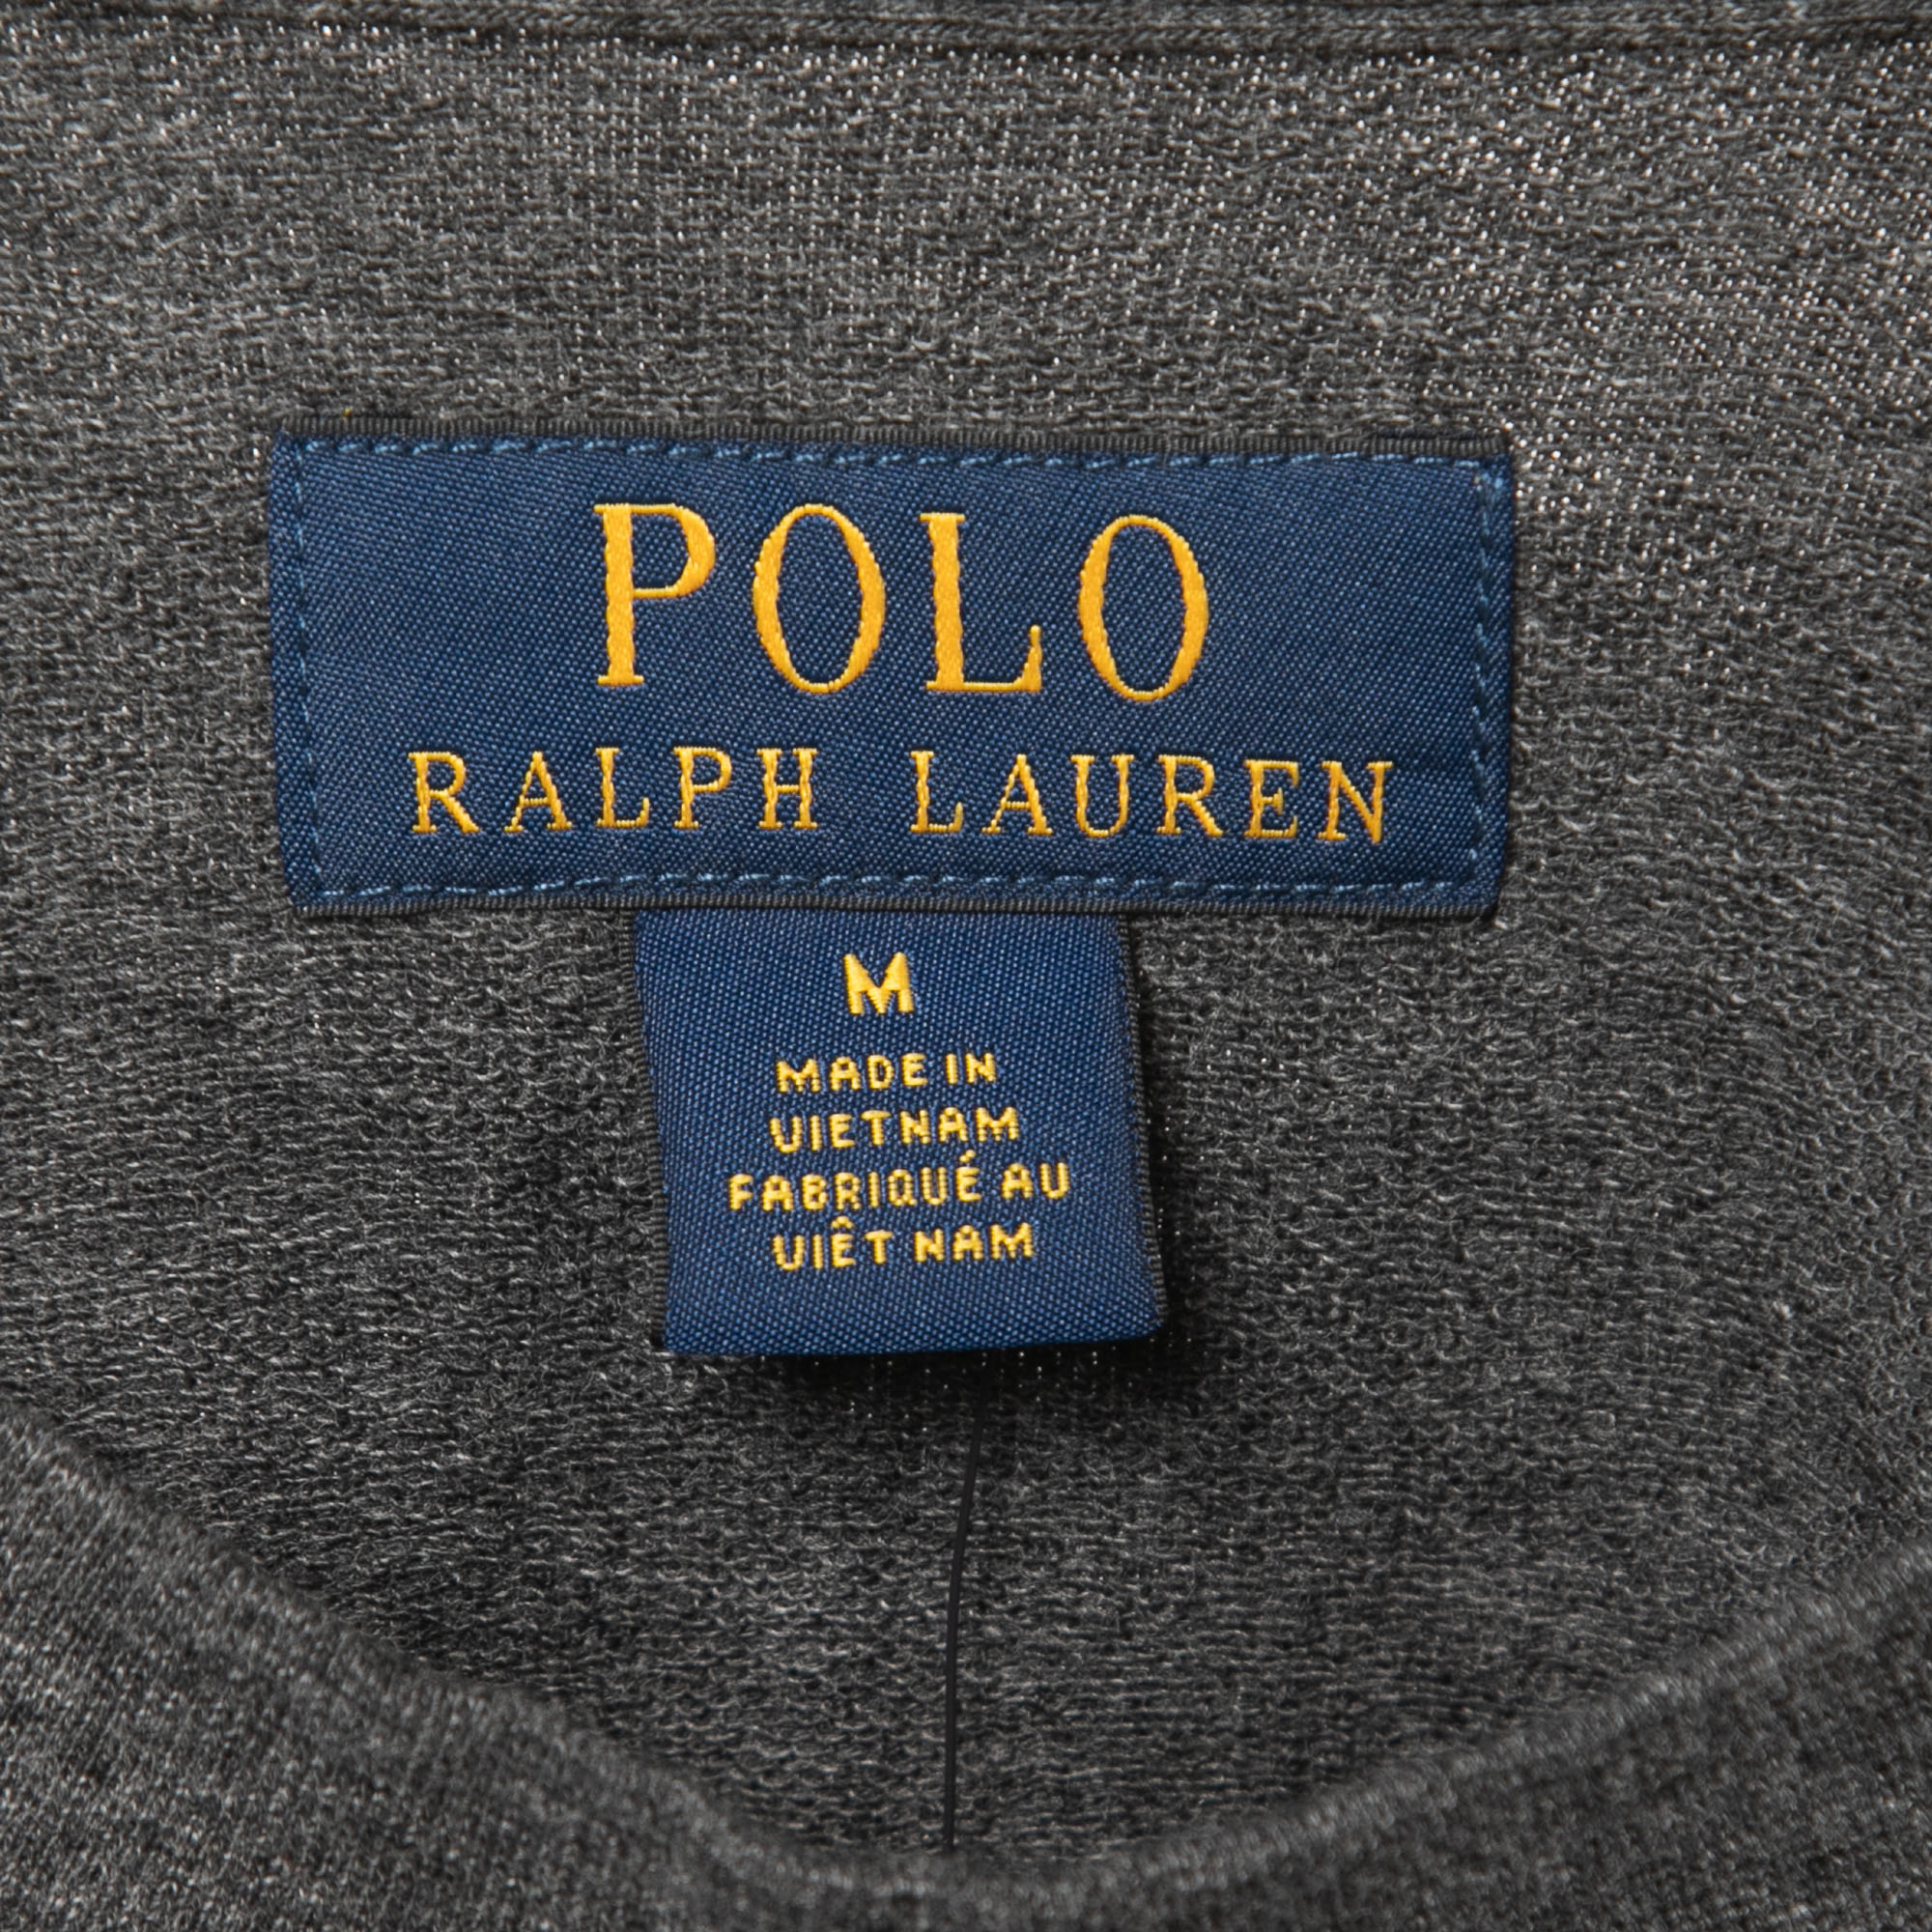 Polo Ralph Lauren Grey Cotton Crew Neck Long Sleeve T-Shirt M